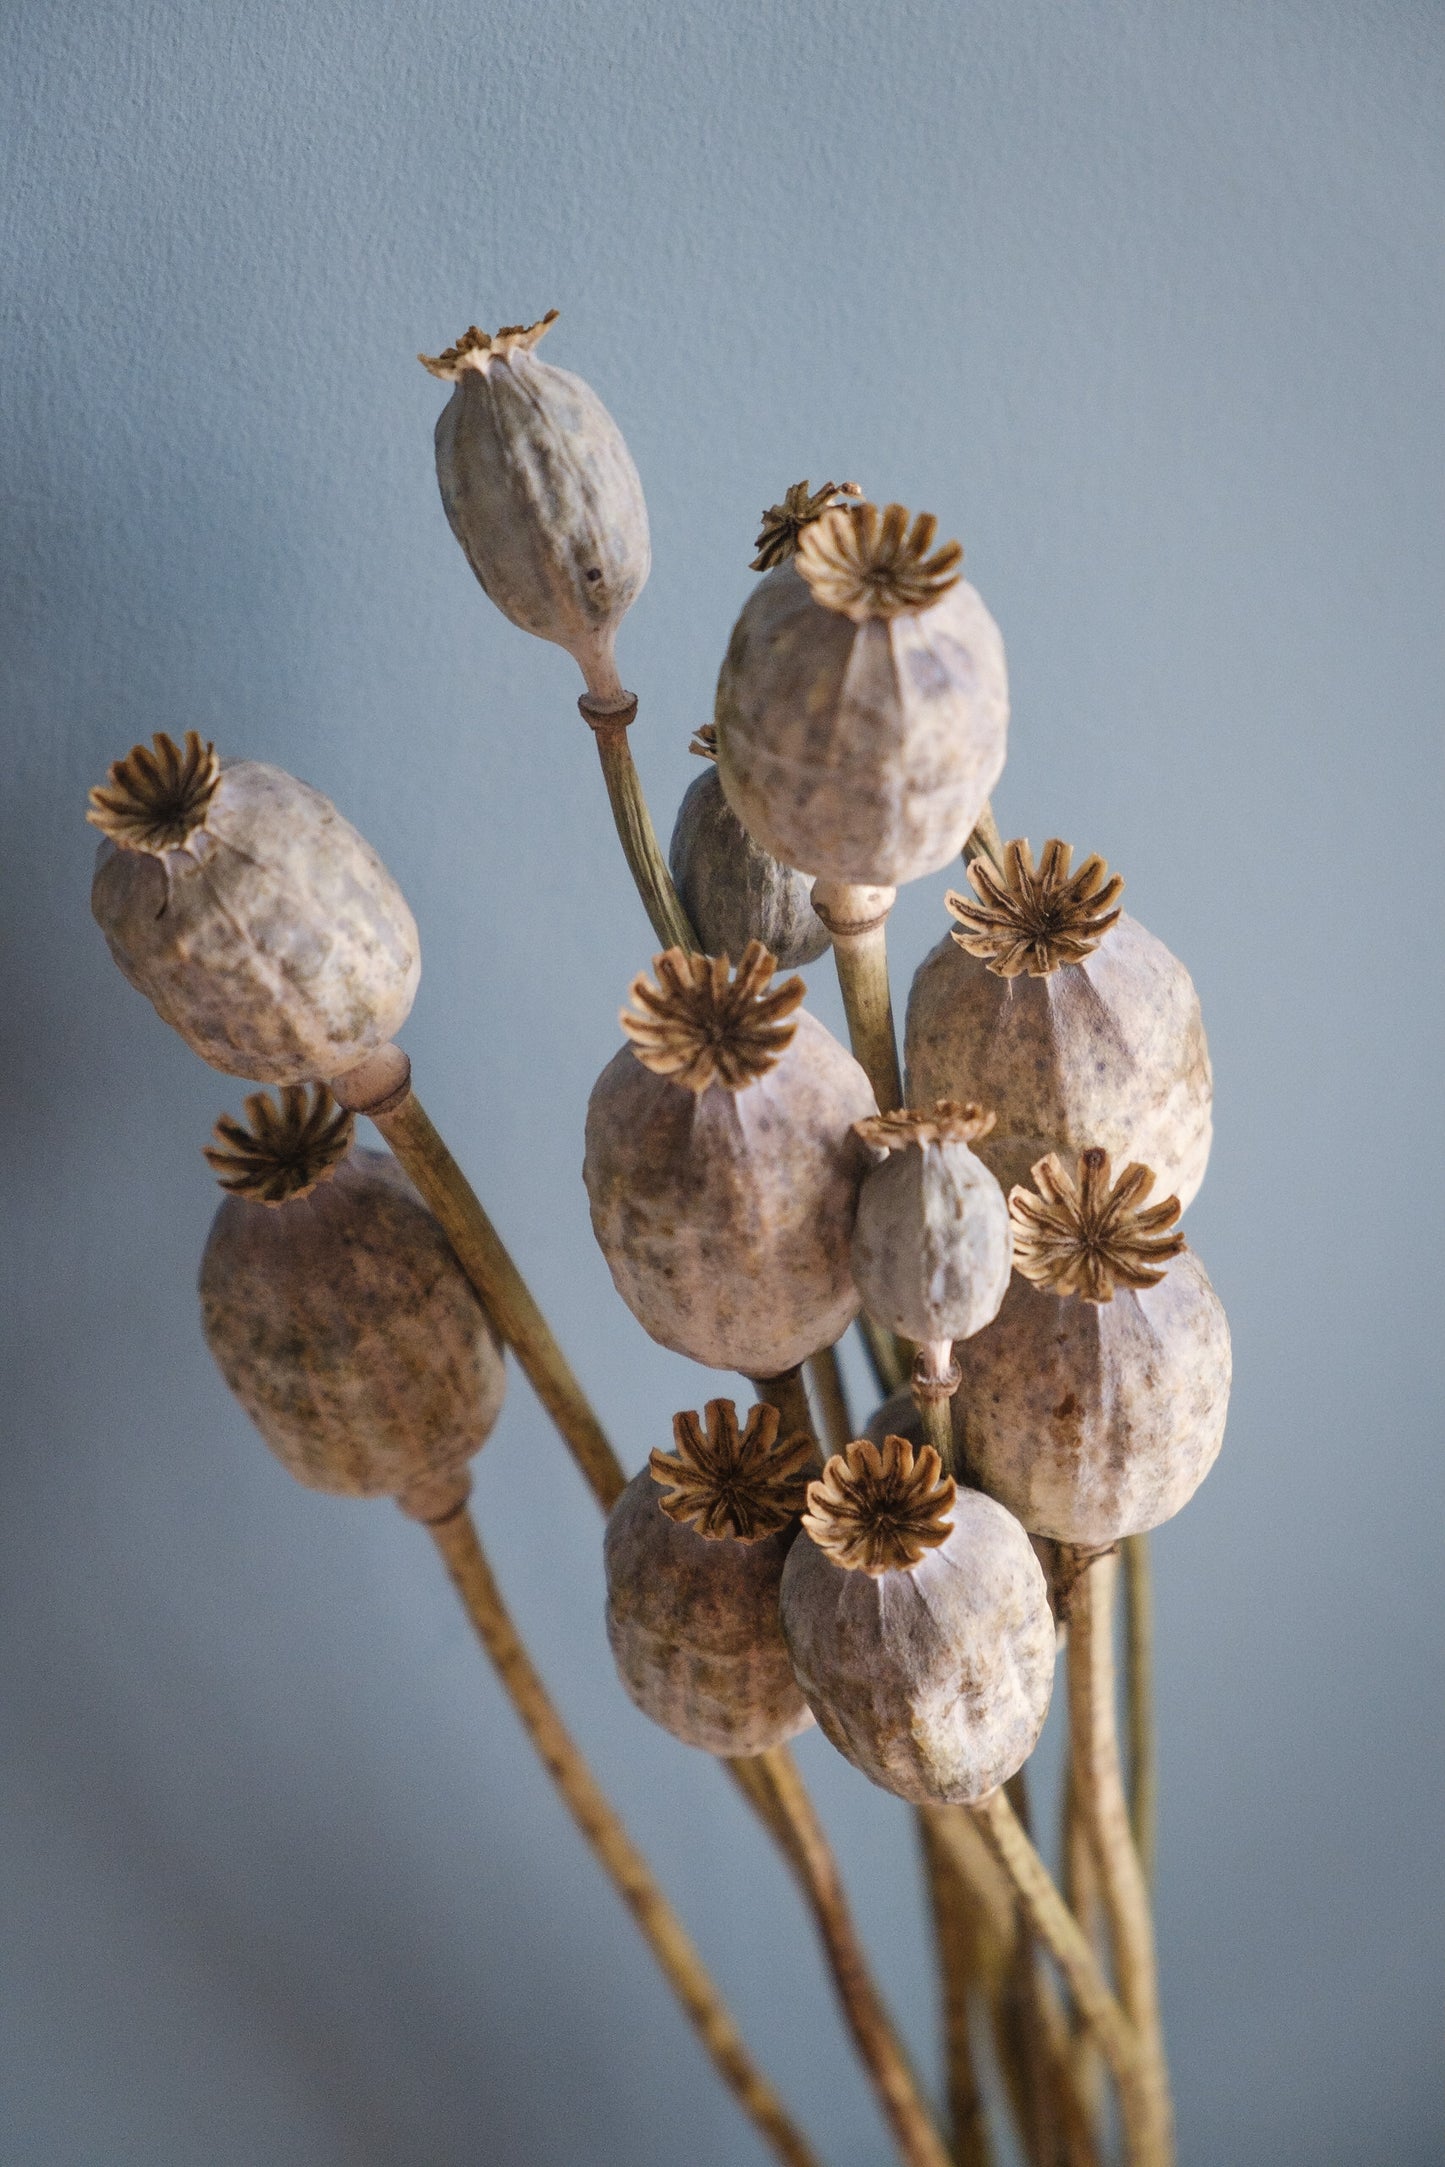 Dried Poppy Seed Heads (Papaver)